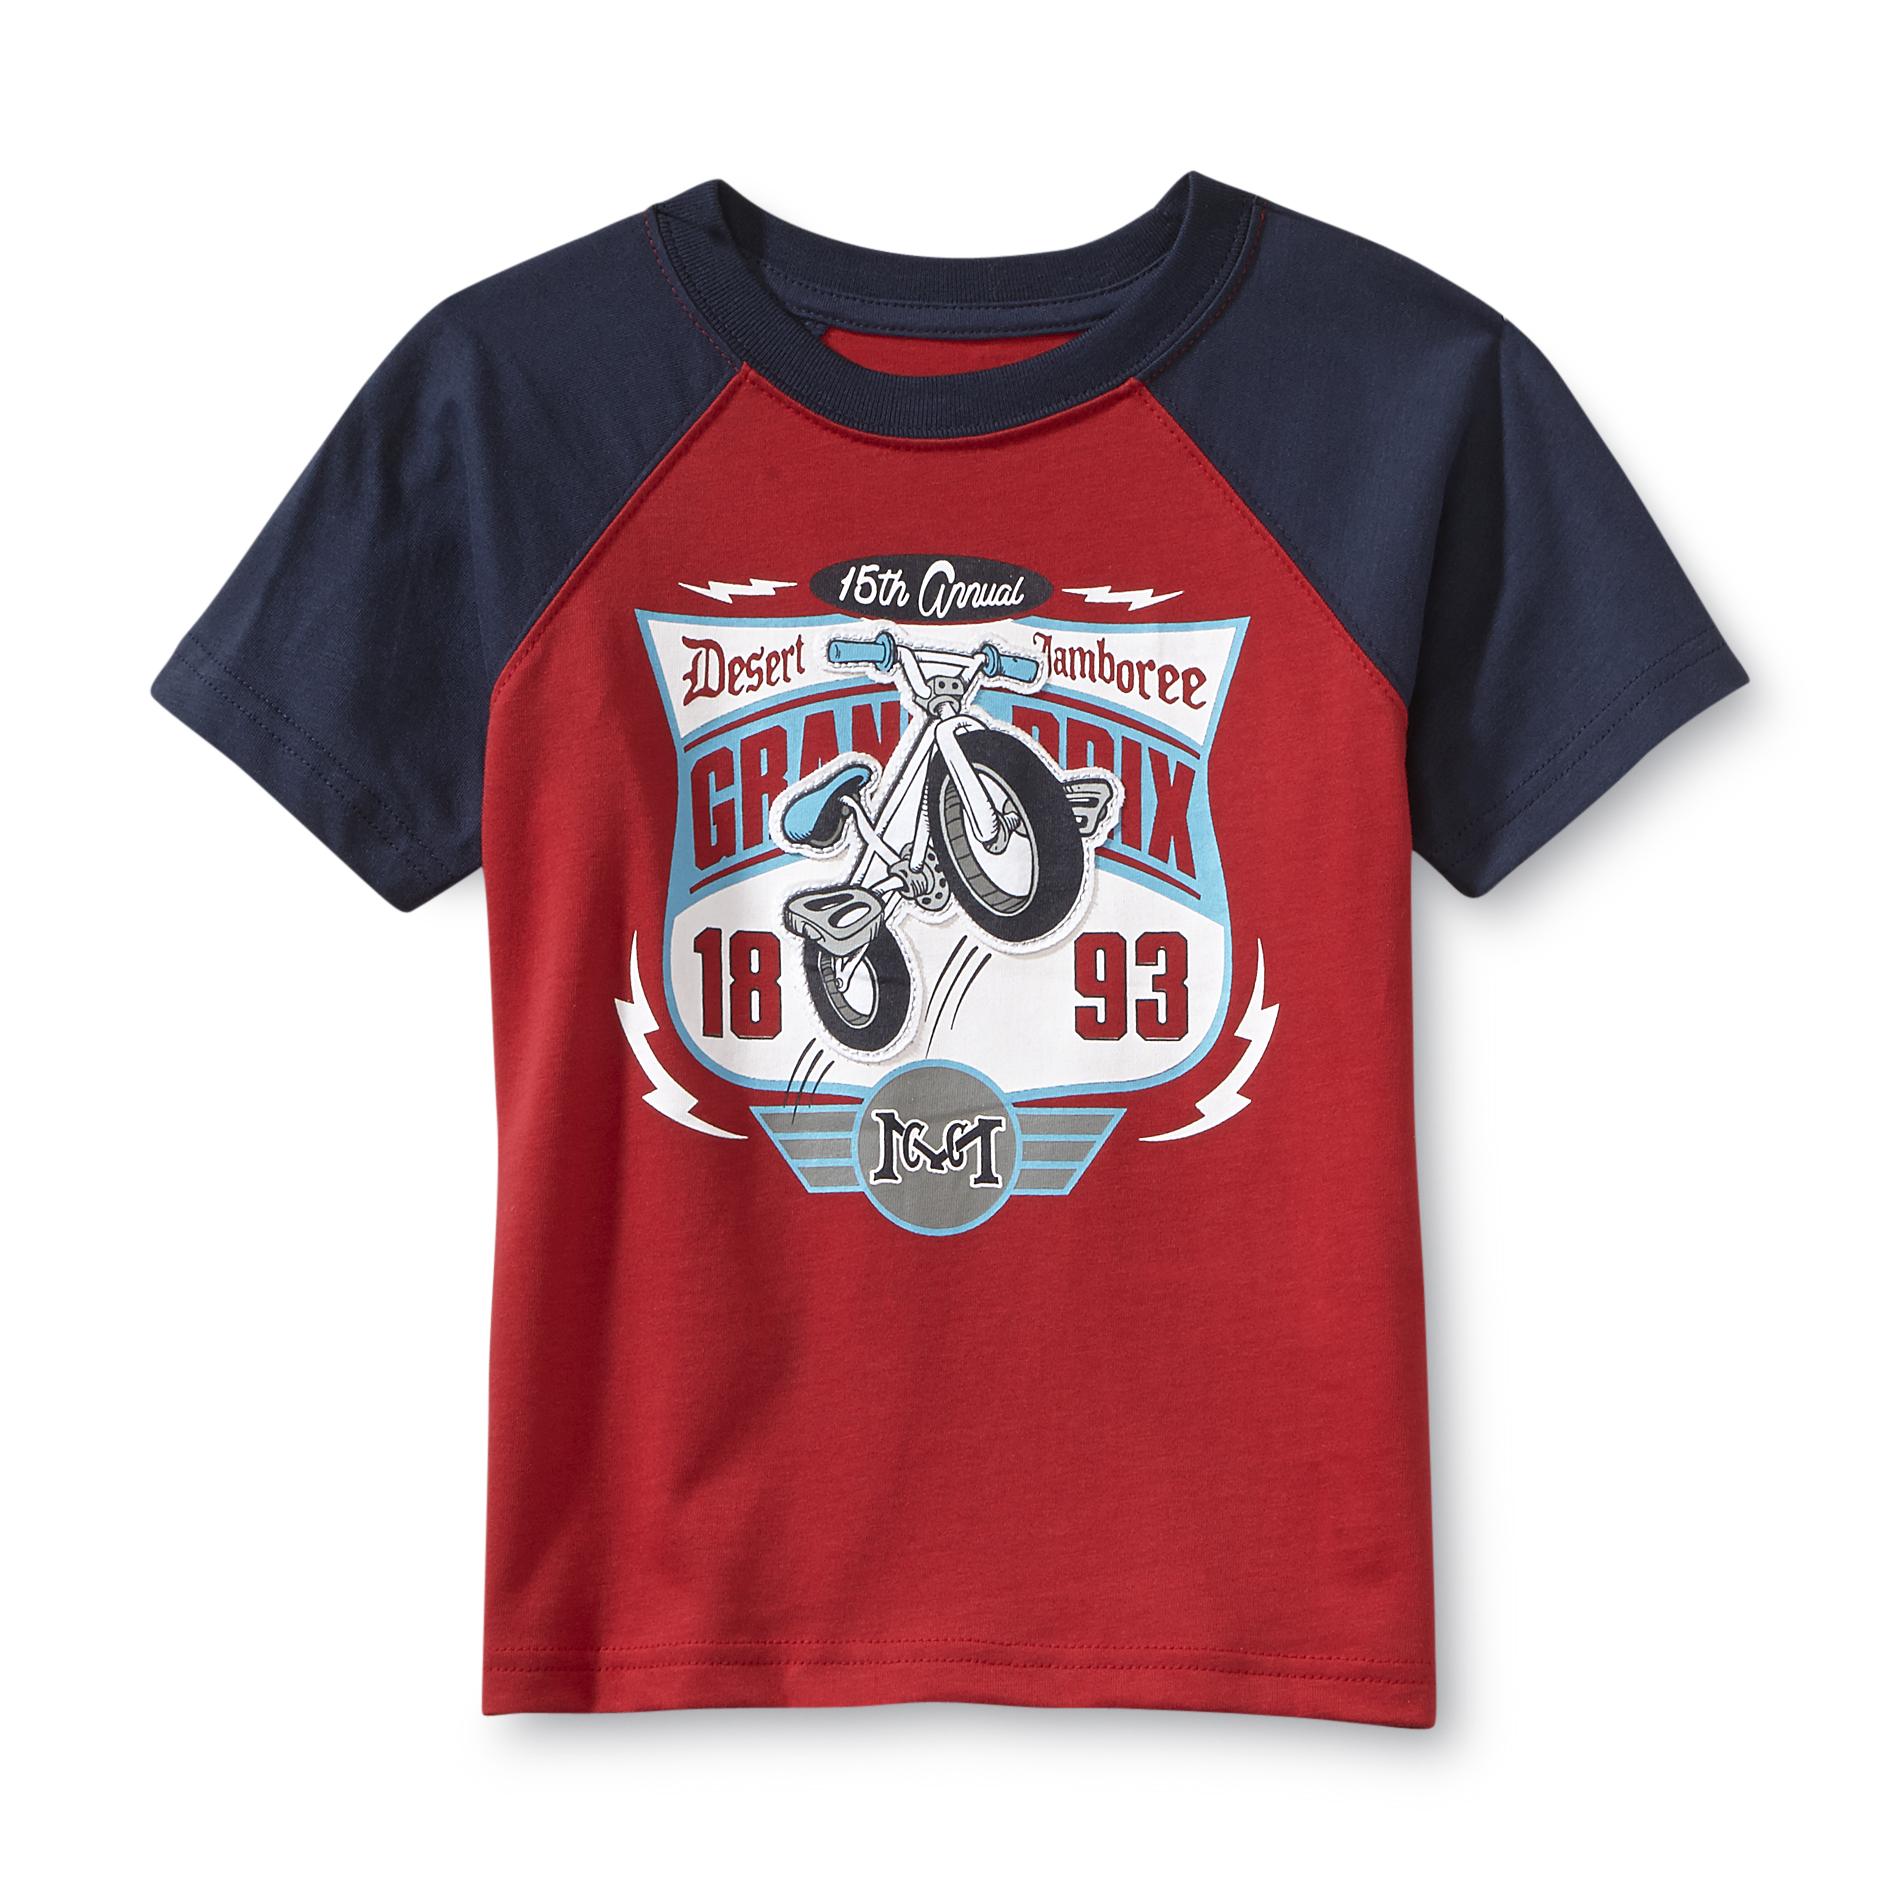 Toughskins Infant & Toddler Boy's Graphic T-Shirt - Grand Prix